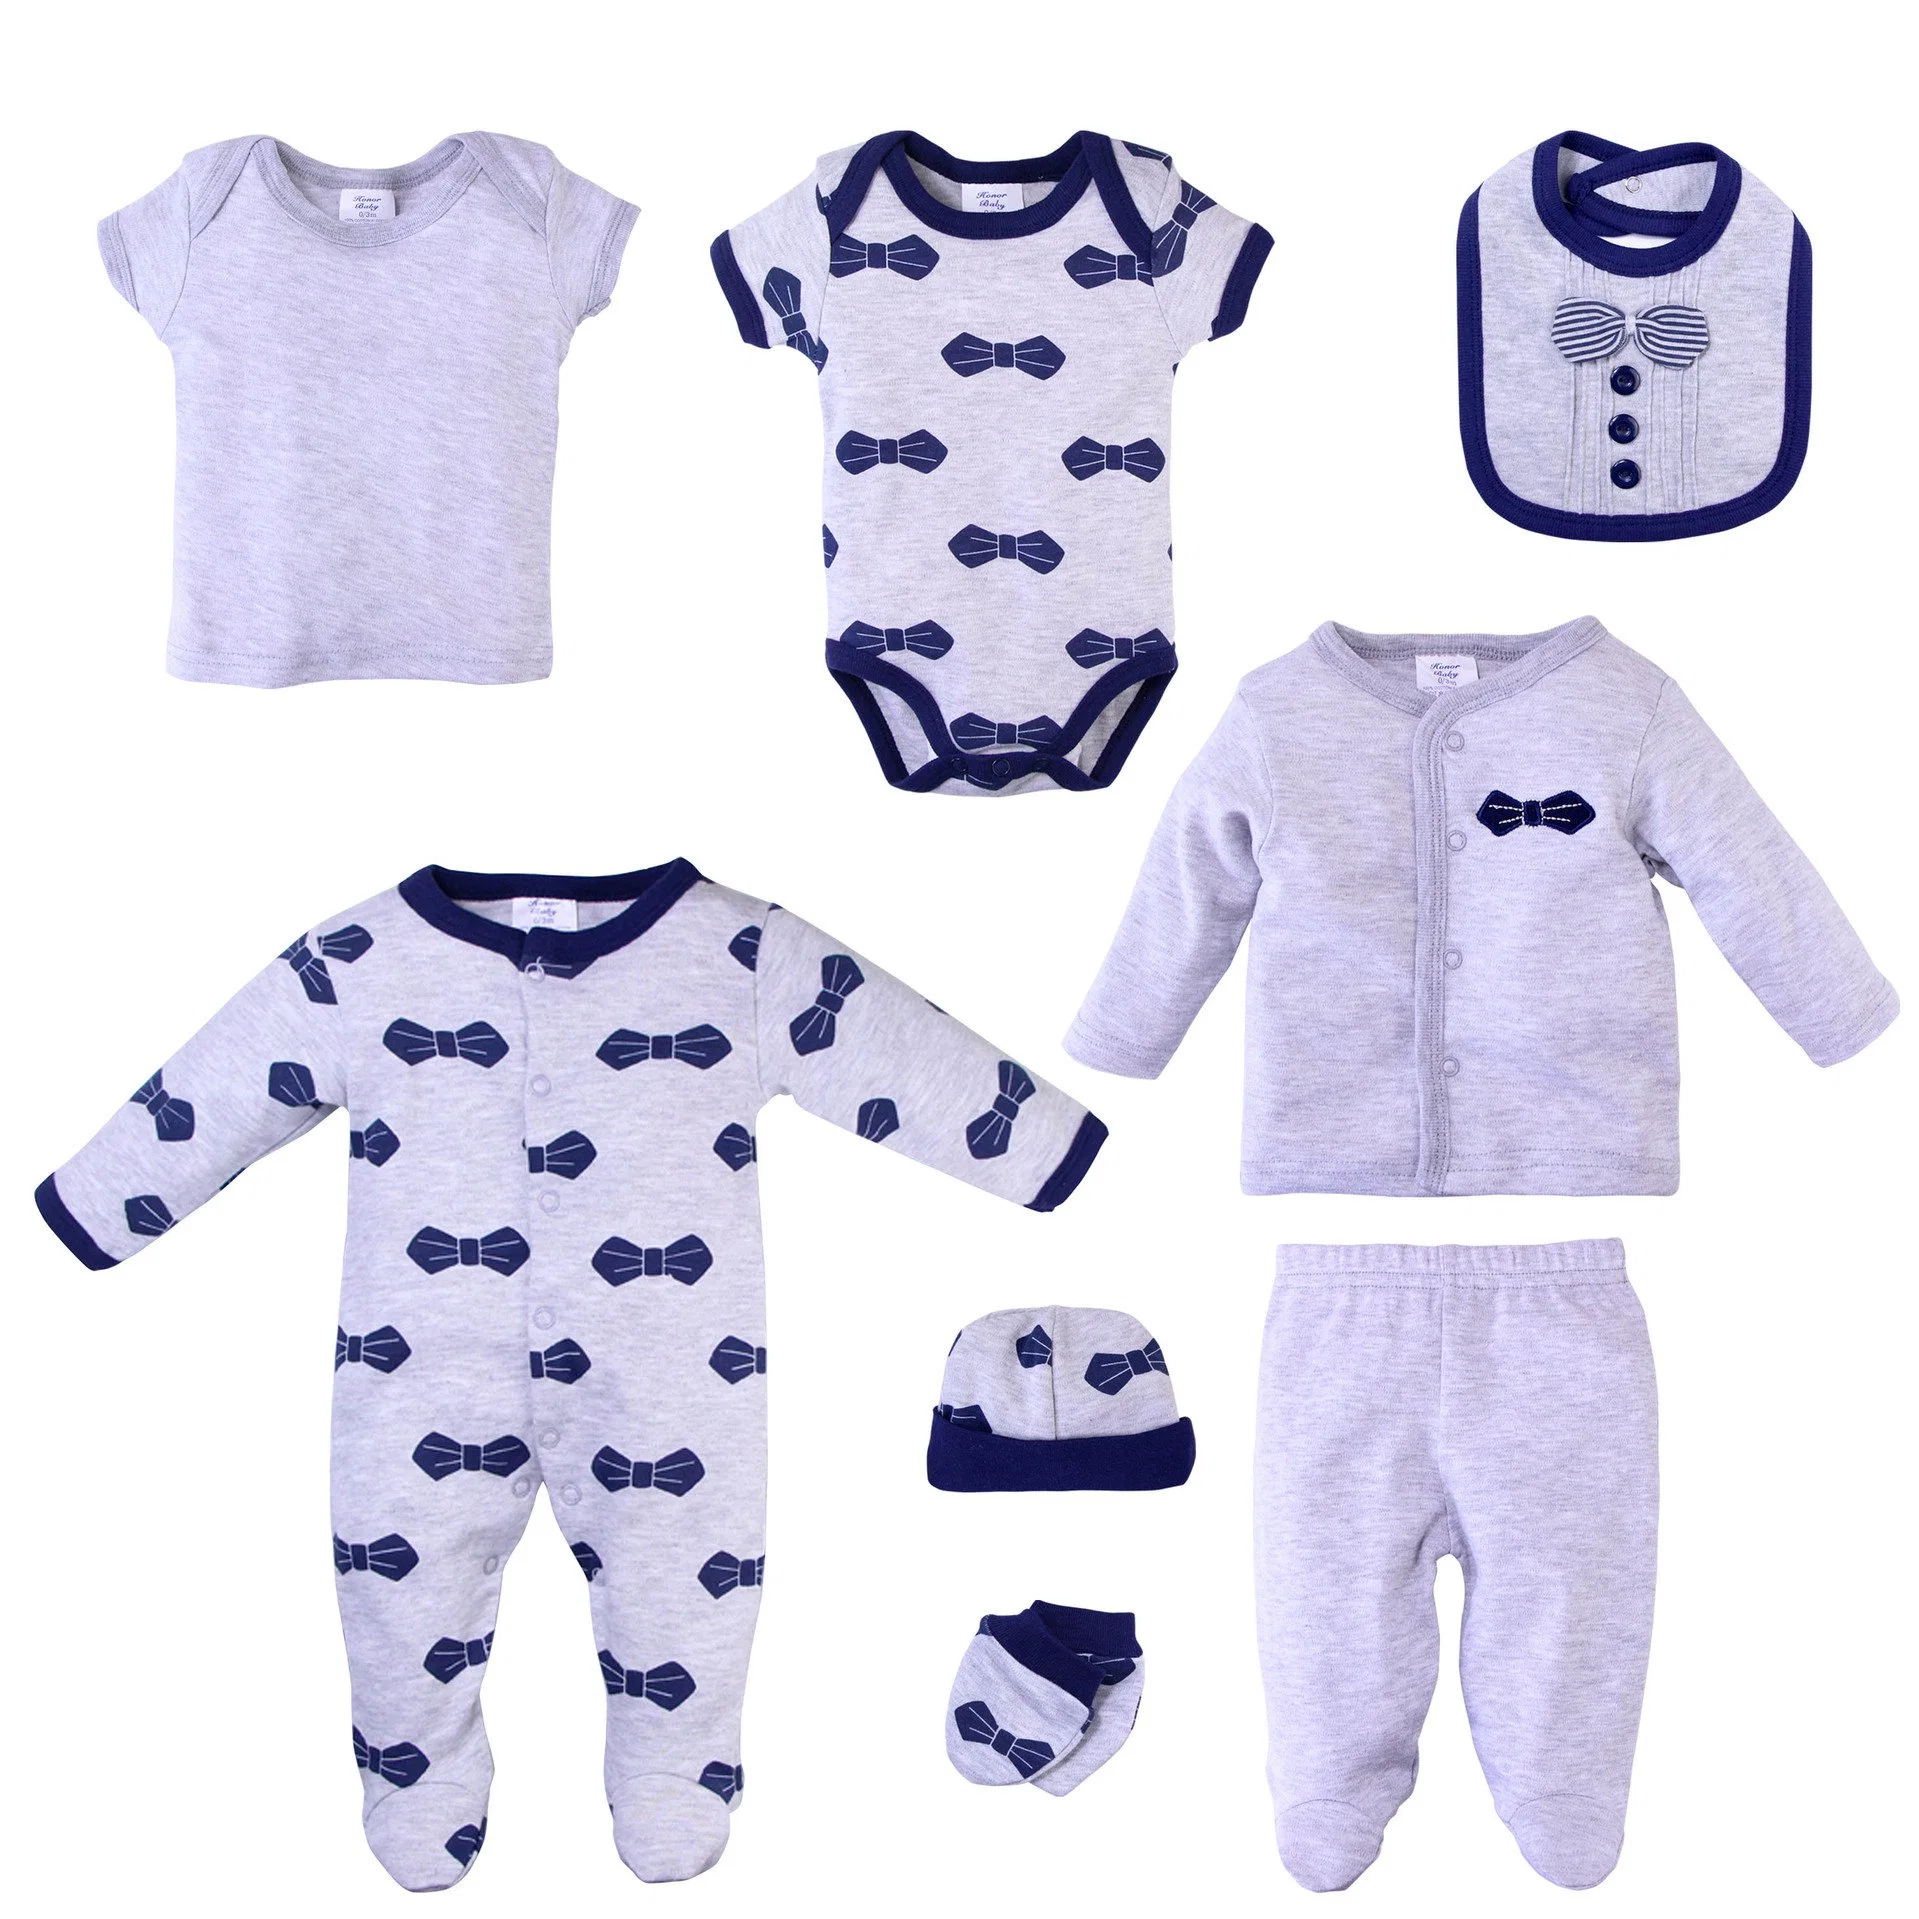 Wholesale 5PCS Pack Newborn Baby Clothing Set Baby Rompers Pajamas Gift Sets Bib Mitten Socks Hat Cotton Boy Girl Romper Baby Clothes Set